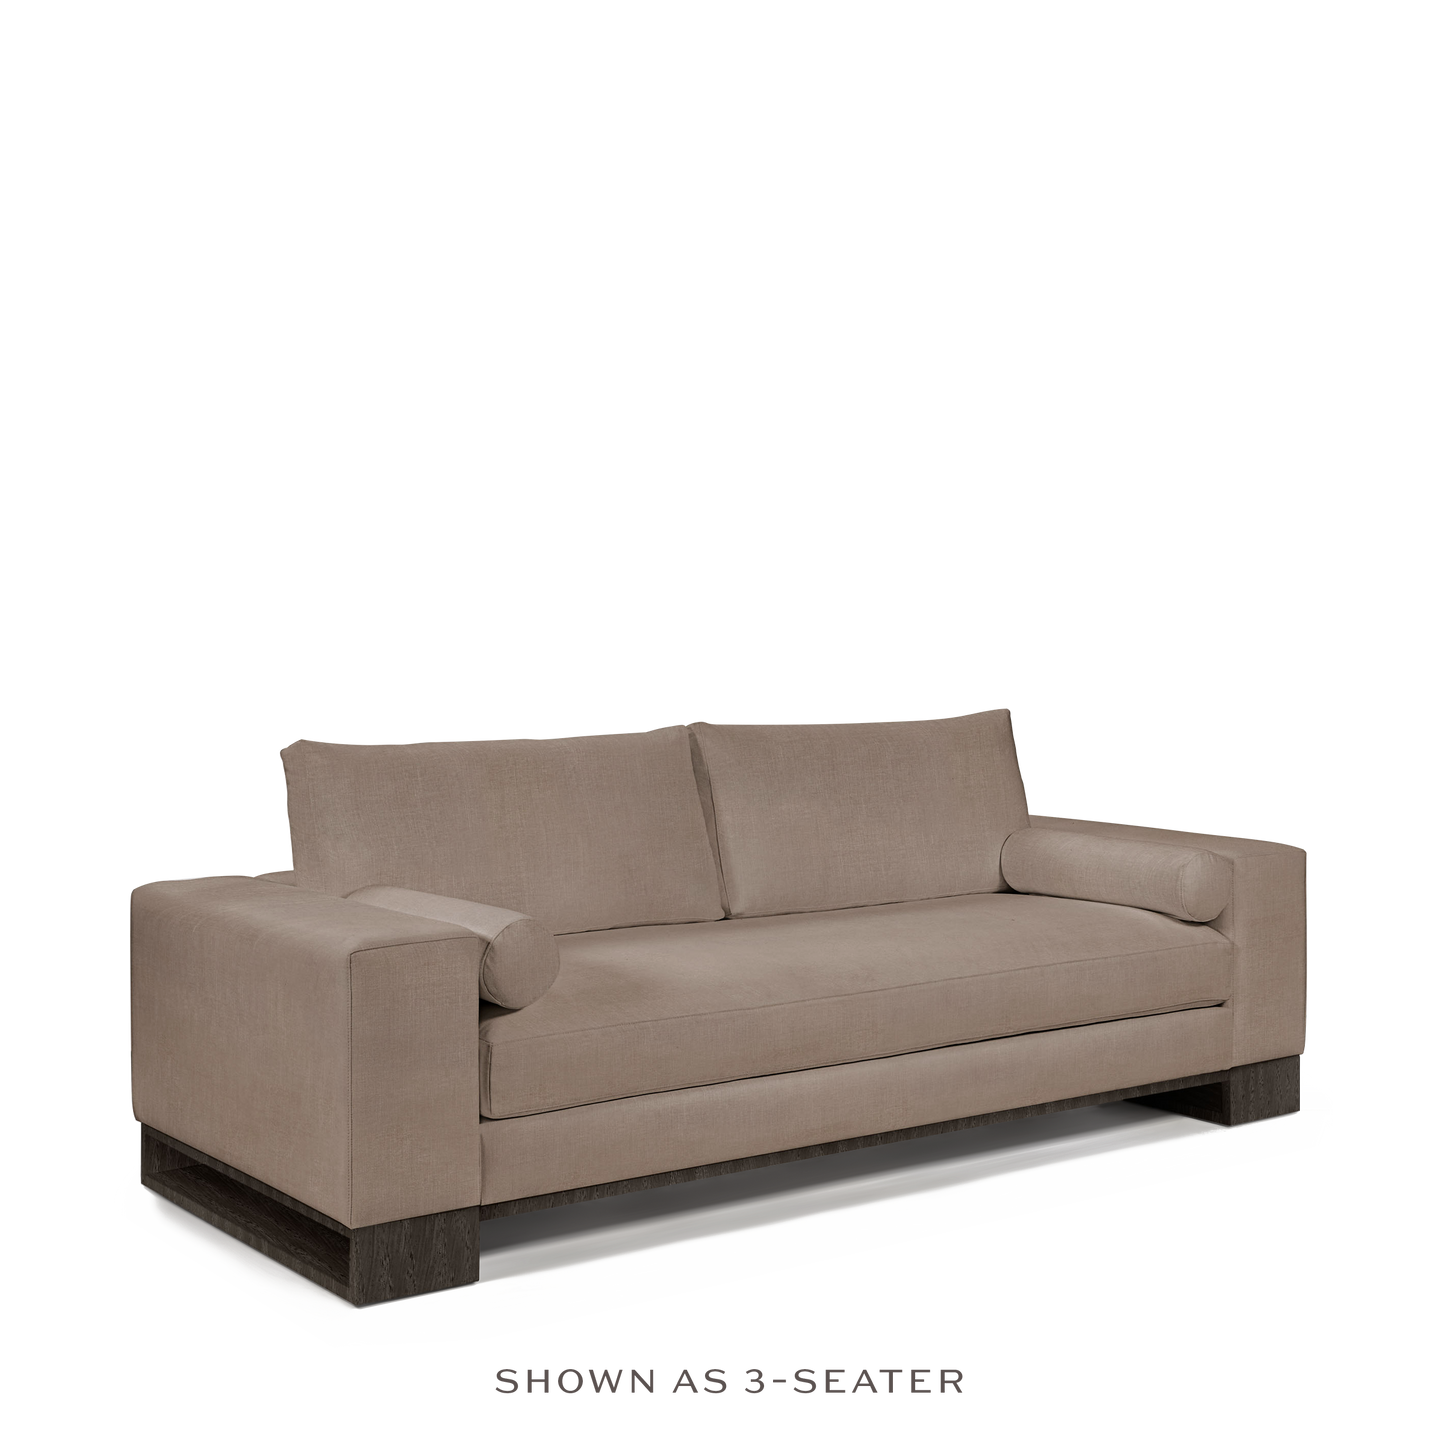 TERRA 2-seater sofa with linara light brown textile and dark grey wood legs 